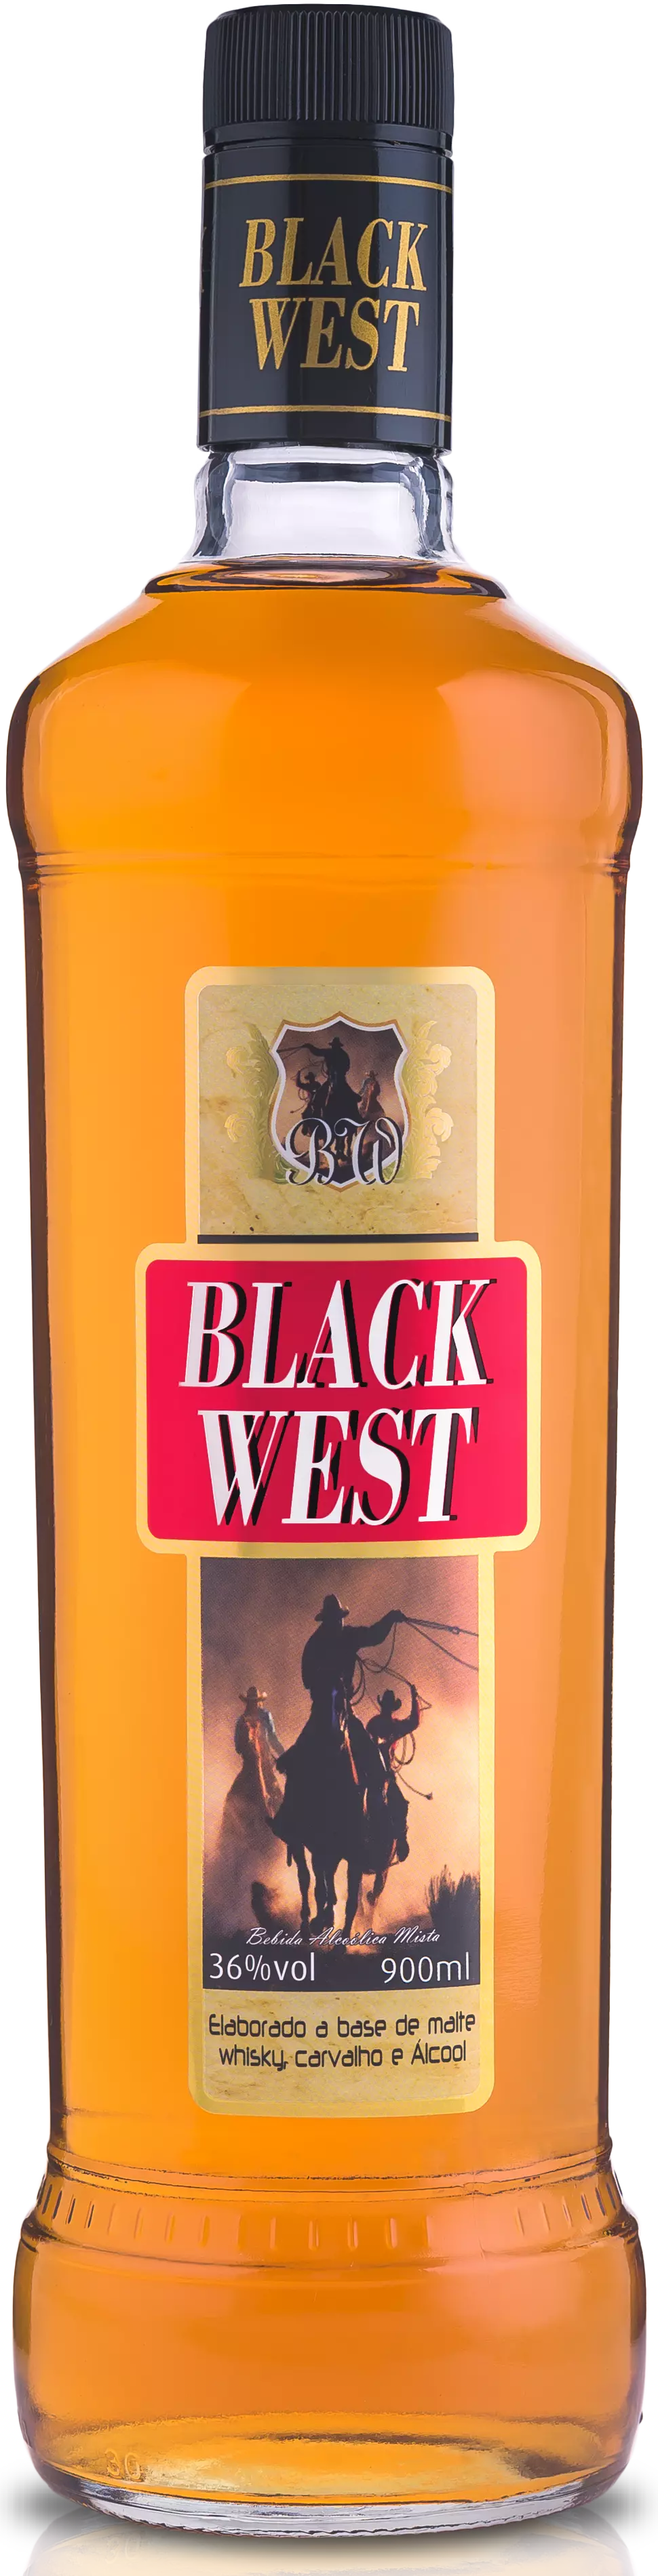 Black West  Malt